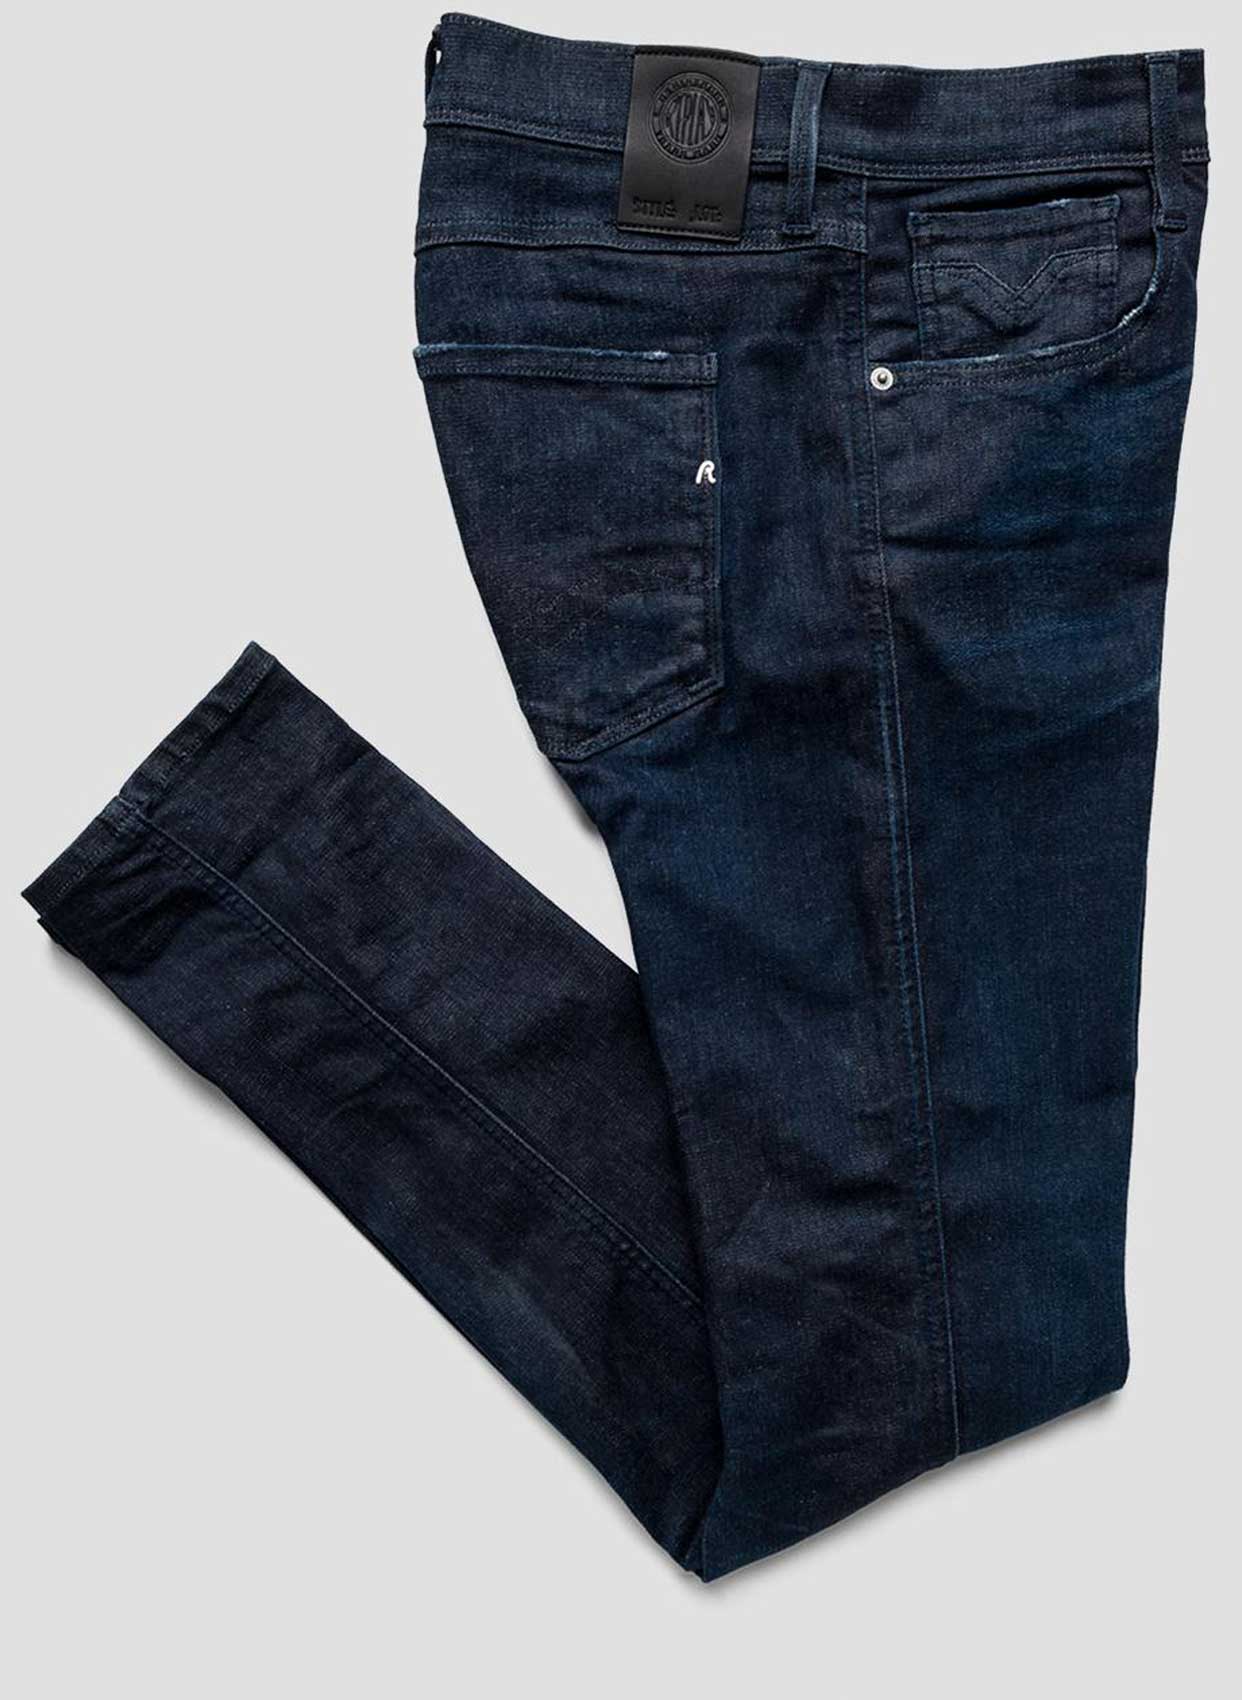 Replay Hyperflex Jeans-Libas Trendy Fashion Store